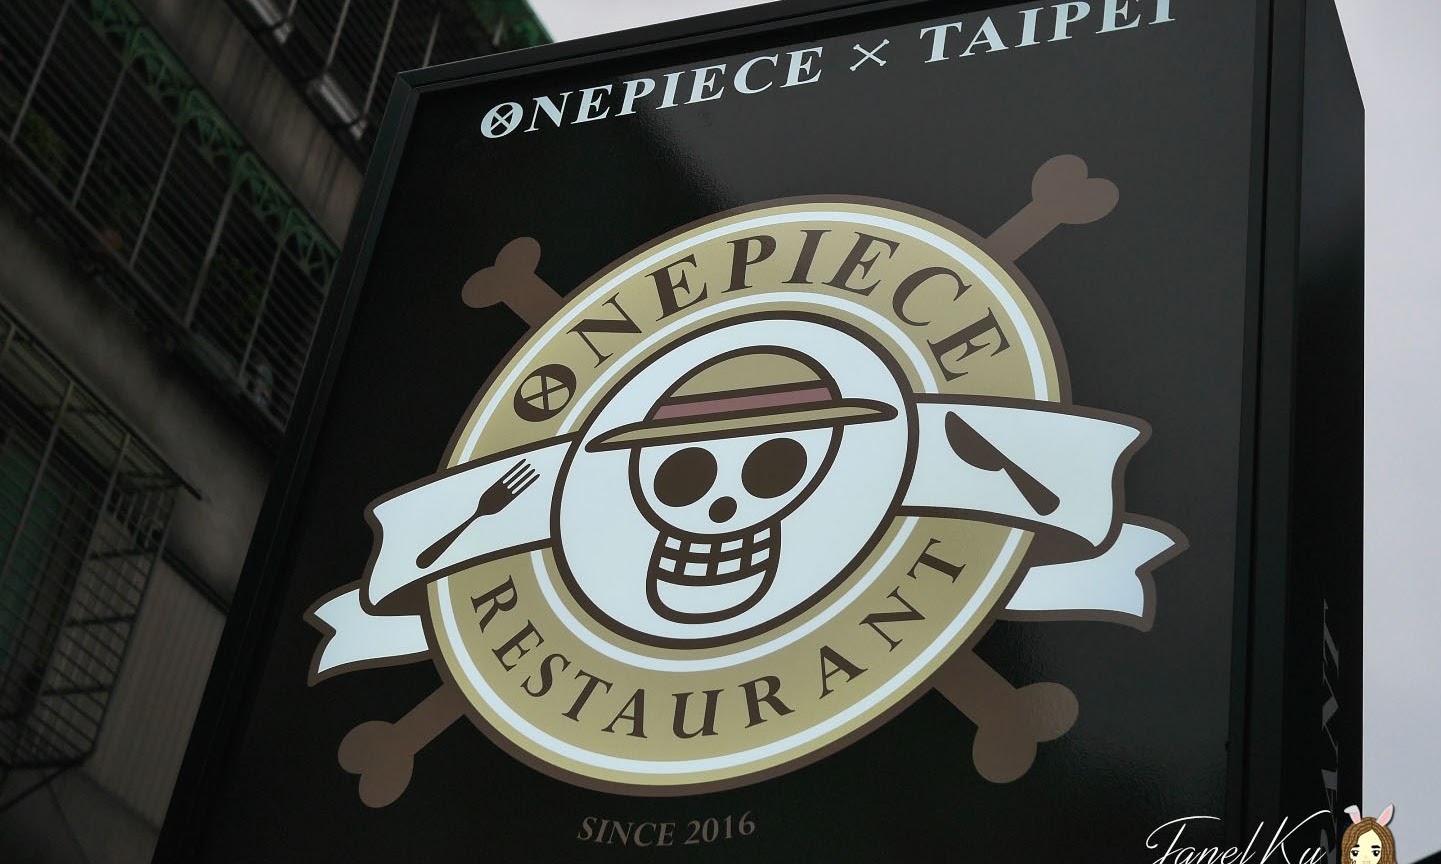 One Piece Restaurant opens in Taipei!